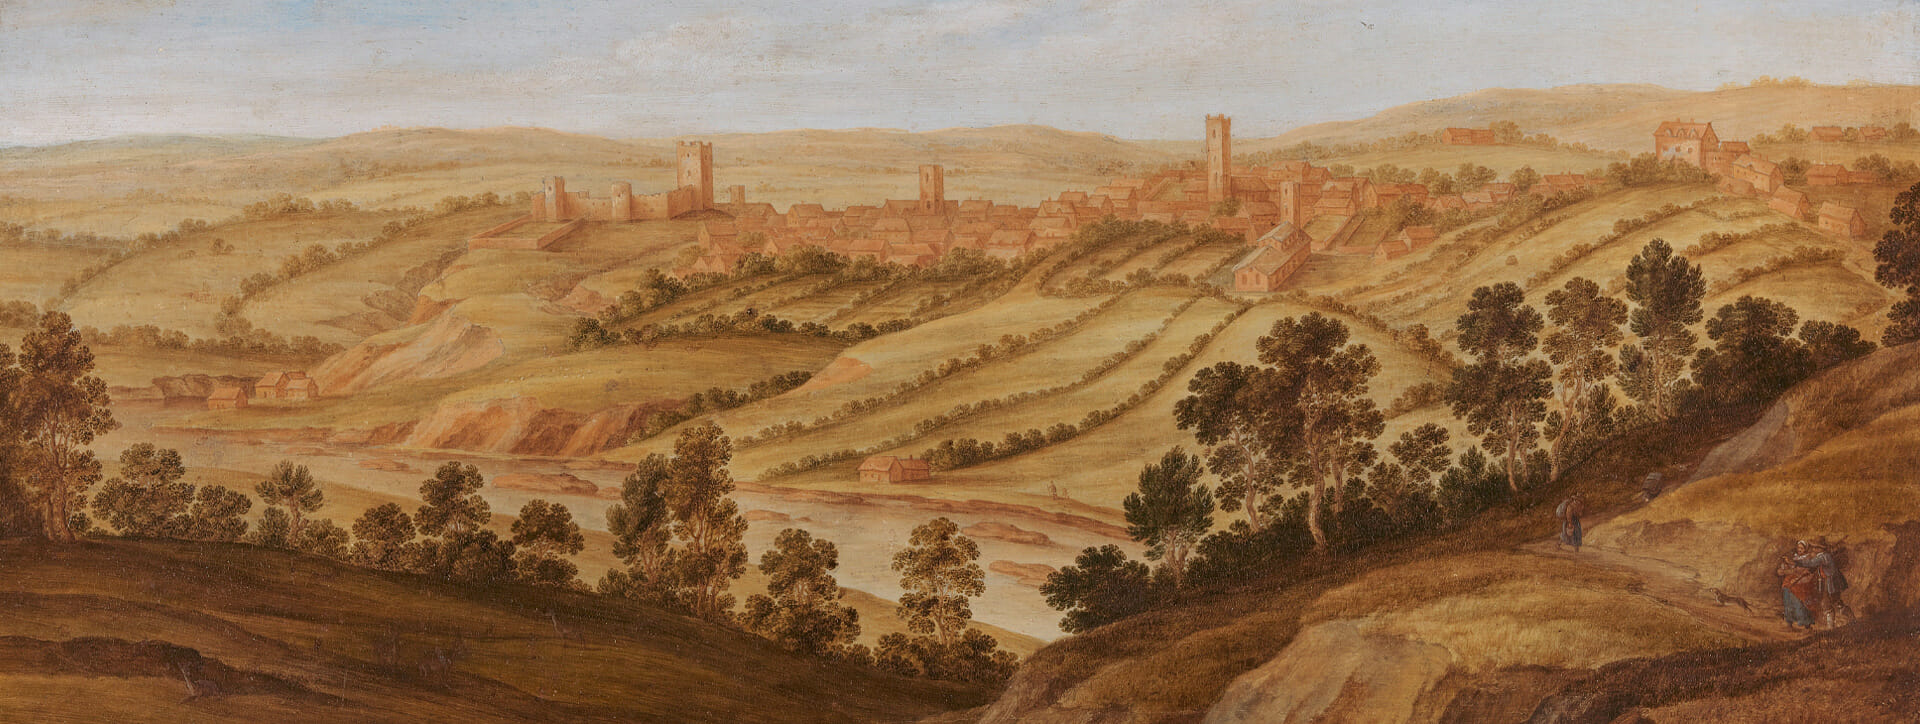 17th century British landscape